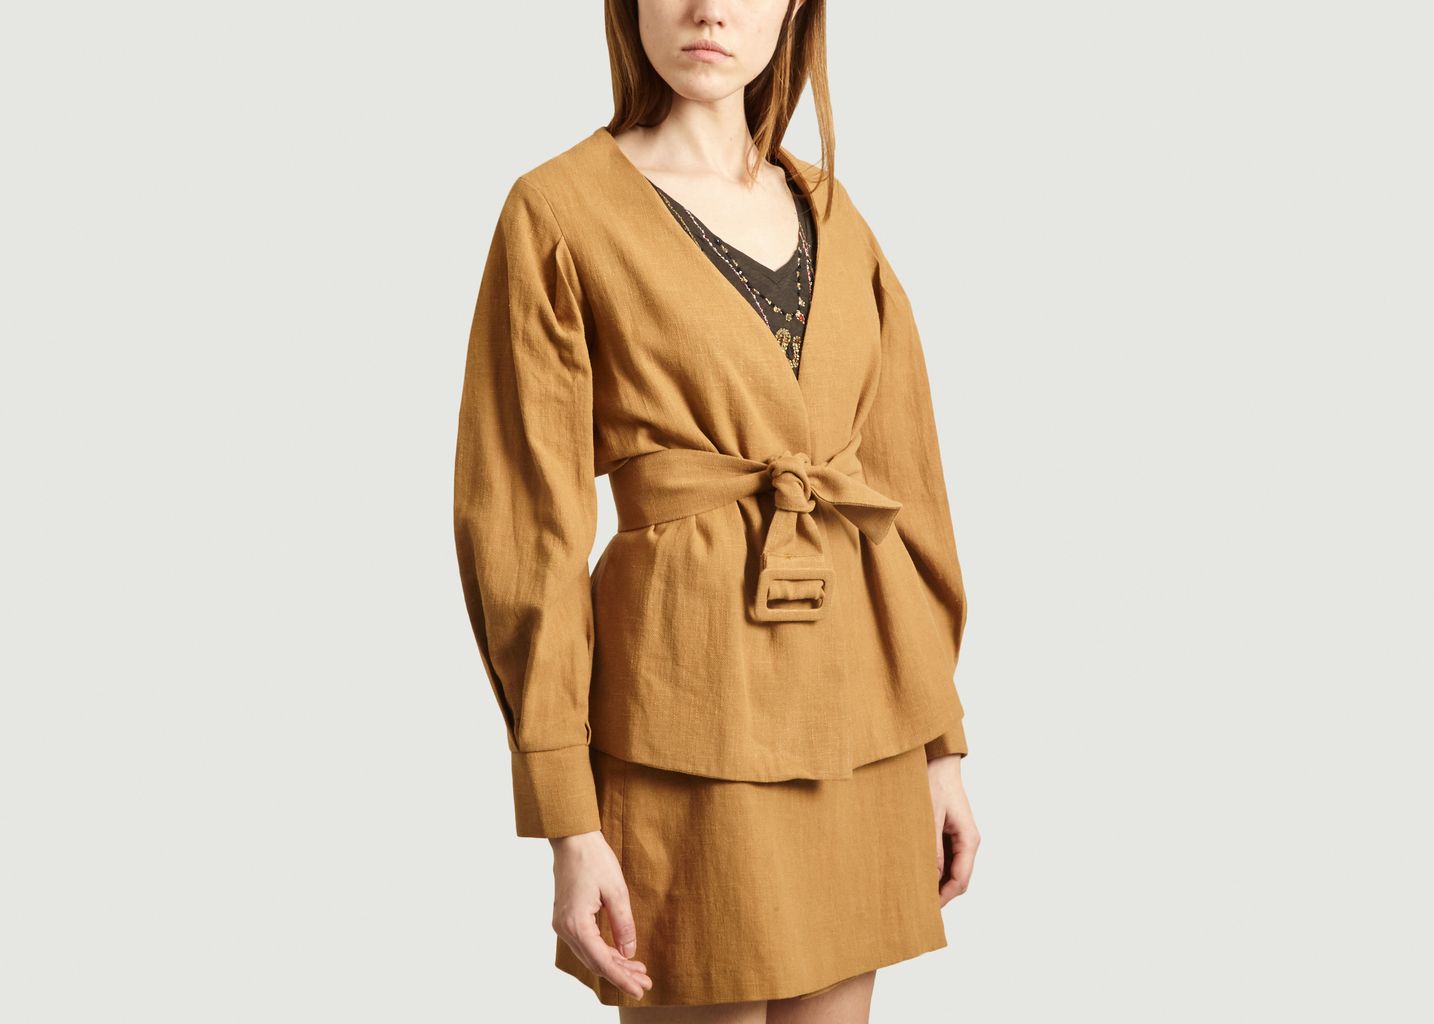 Barbara cotton and linen tailored jacket - Admise Paris